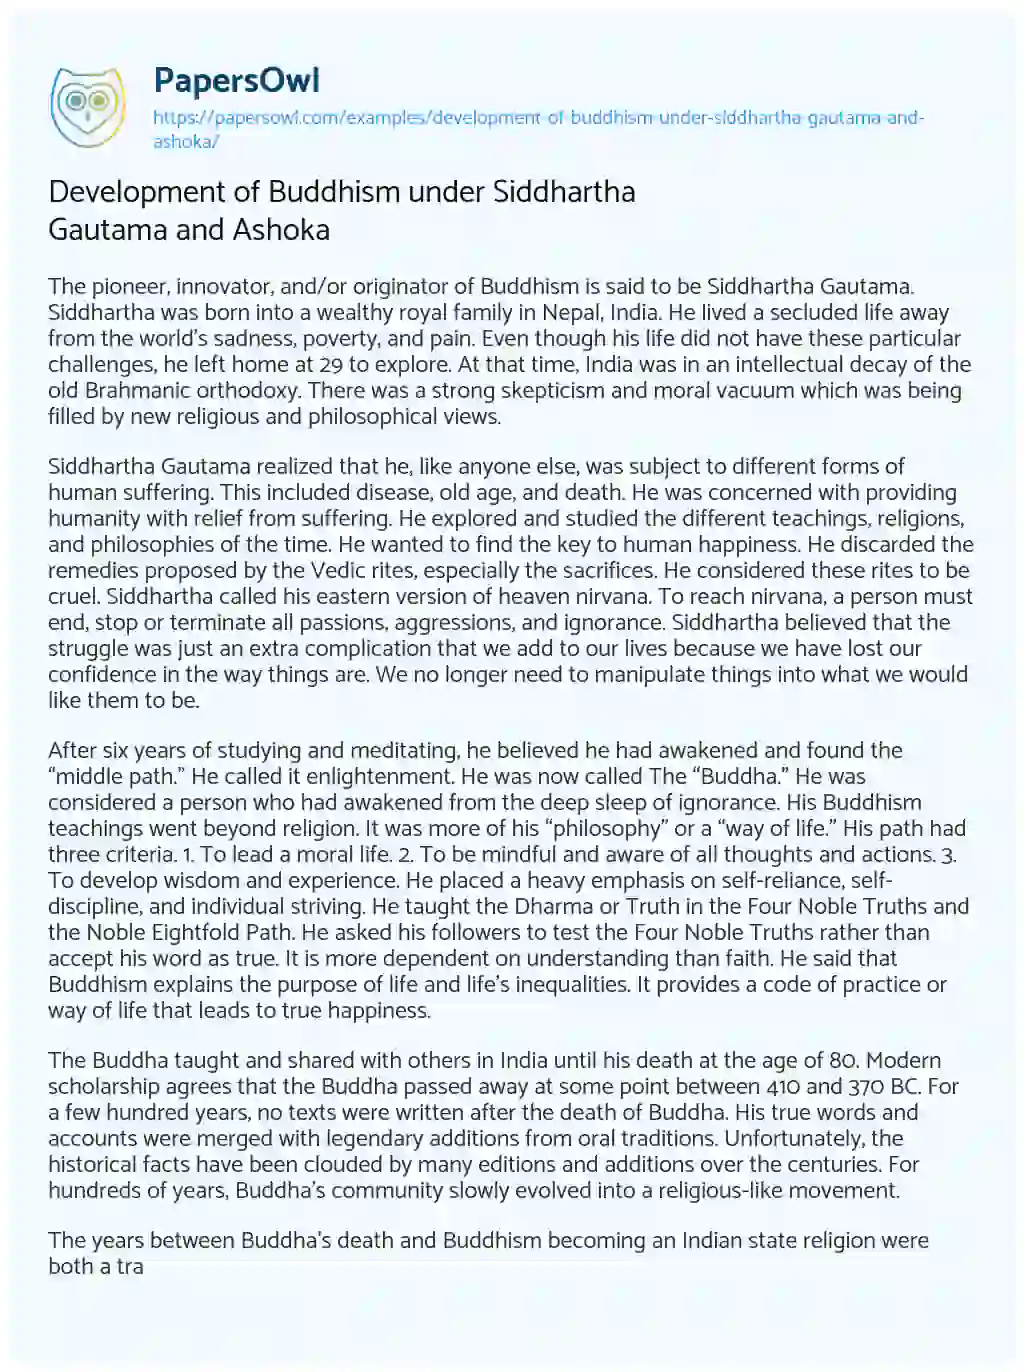 Essay on Development of Buddhism under Siddhartha Gautama and Ashoka